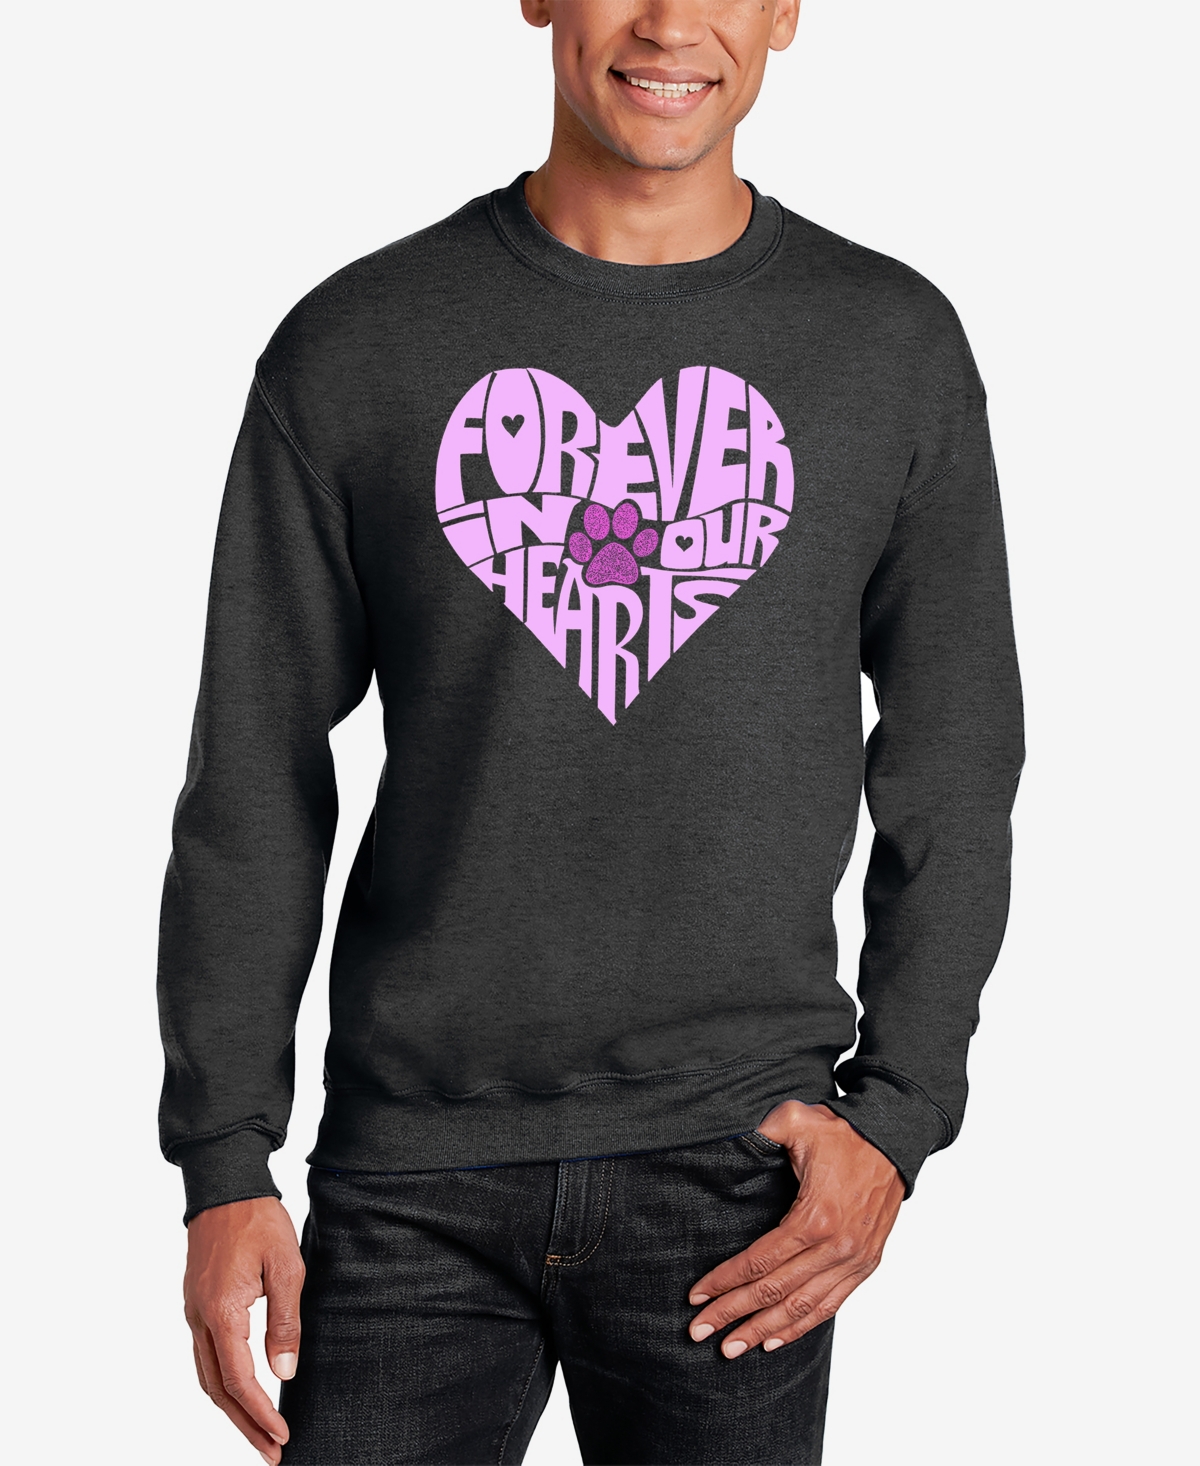 Forever In Our Hearts - Men's Word Art Crewneck Sweatshirt - Grey